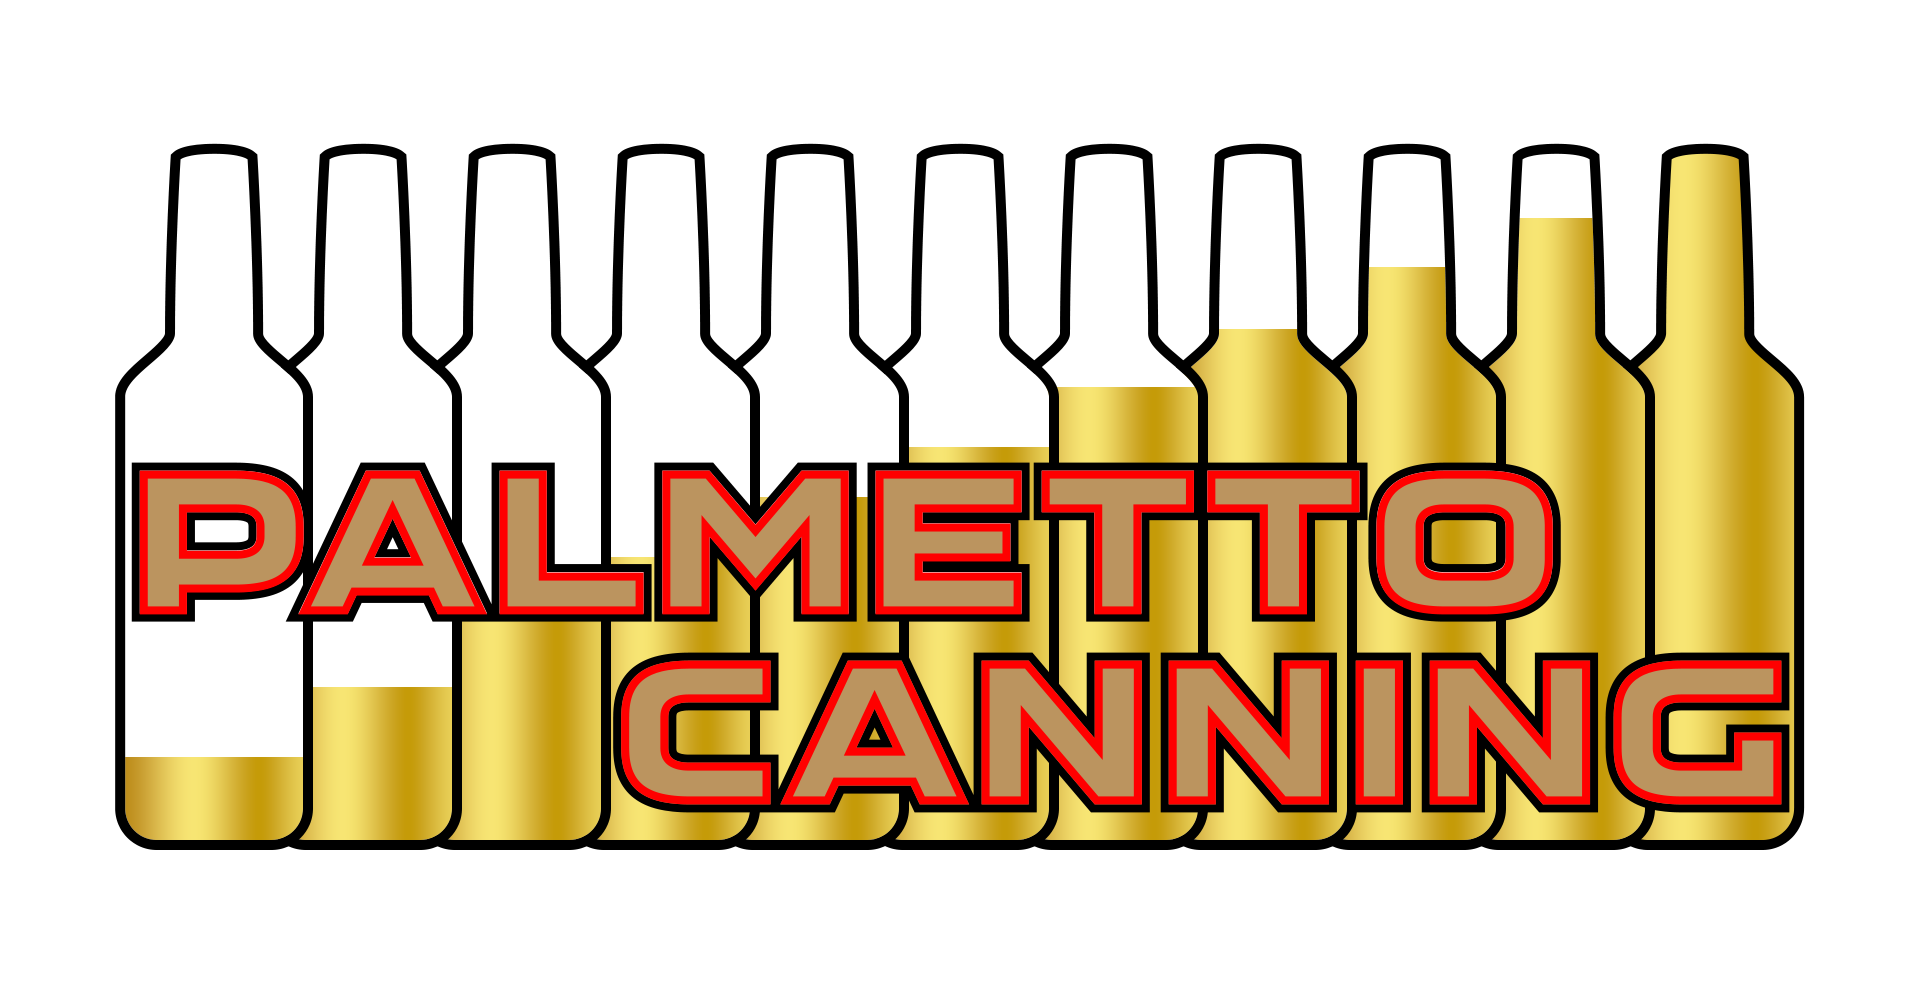 Palmetto Canning logo image